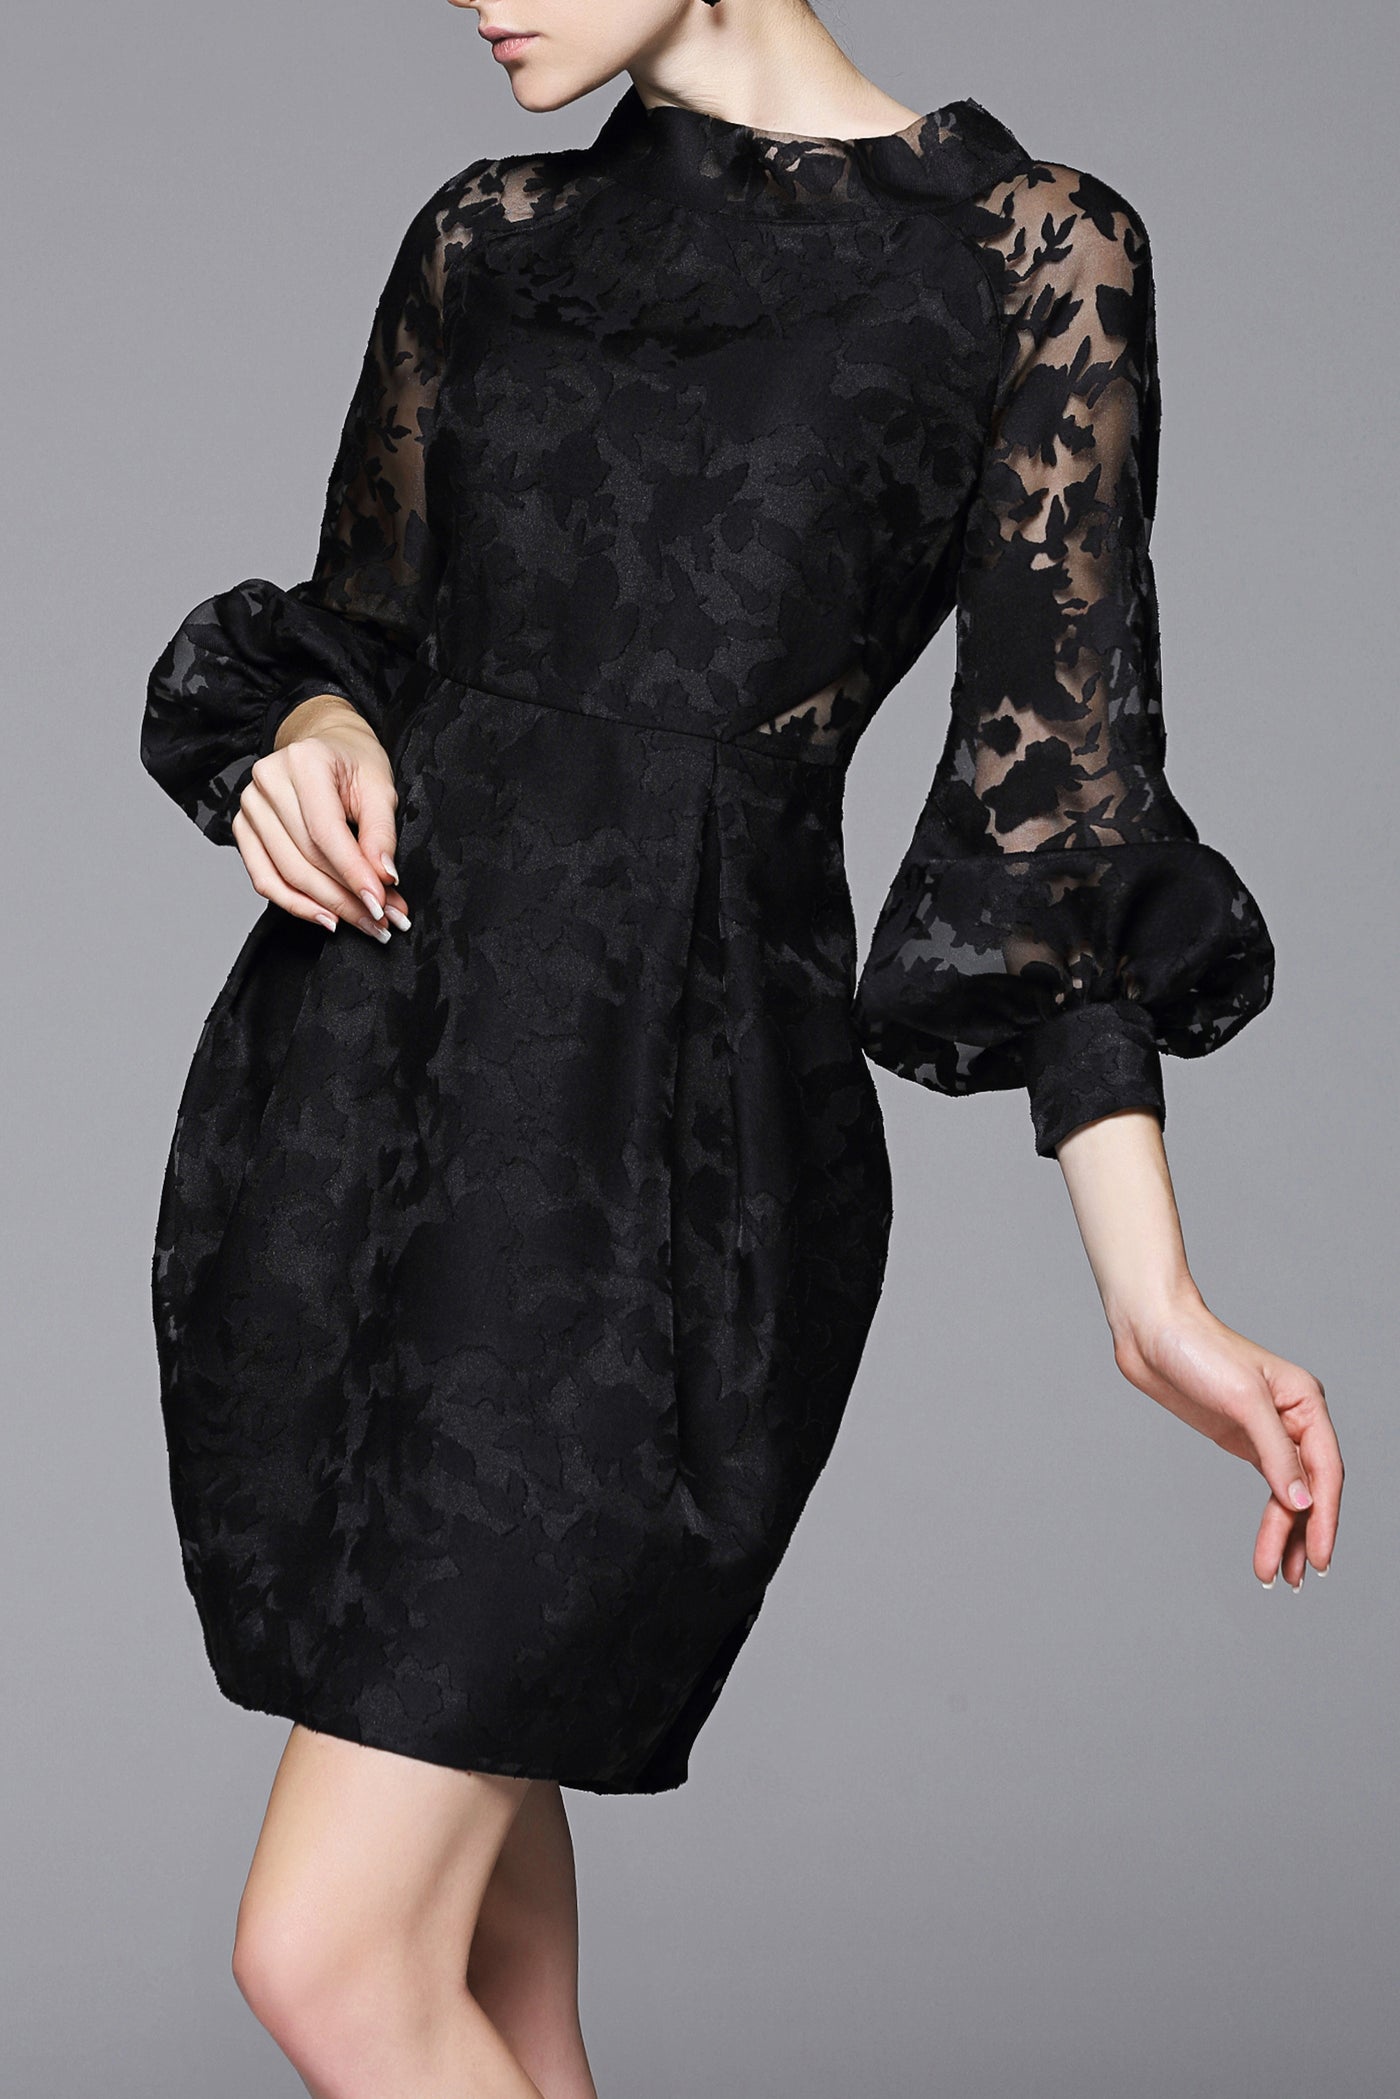 DL Exotic & Chic Eva Black Organza Dress - Best Selling, Little Black Dress